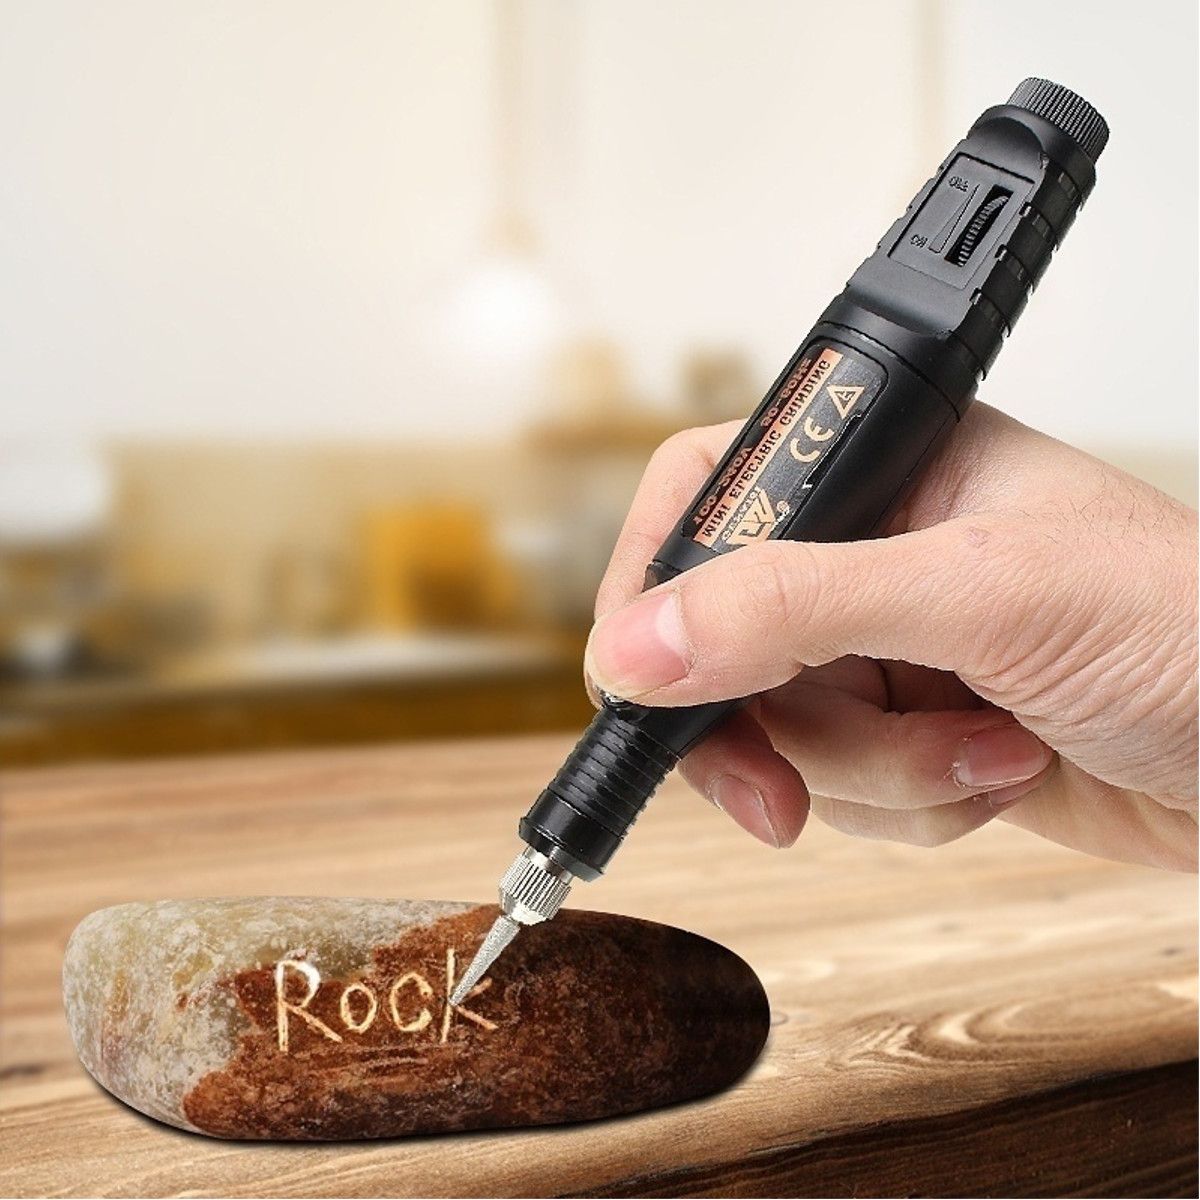 70Pcs-Mini-DIY-Electric-Engraving-Pen-Kit-Adjustable-Speed-Etching-Drilling-Polishing-Pen-For-Jewelr-1684930